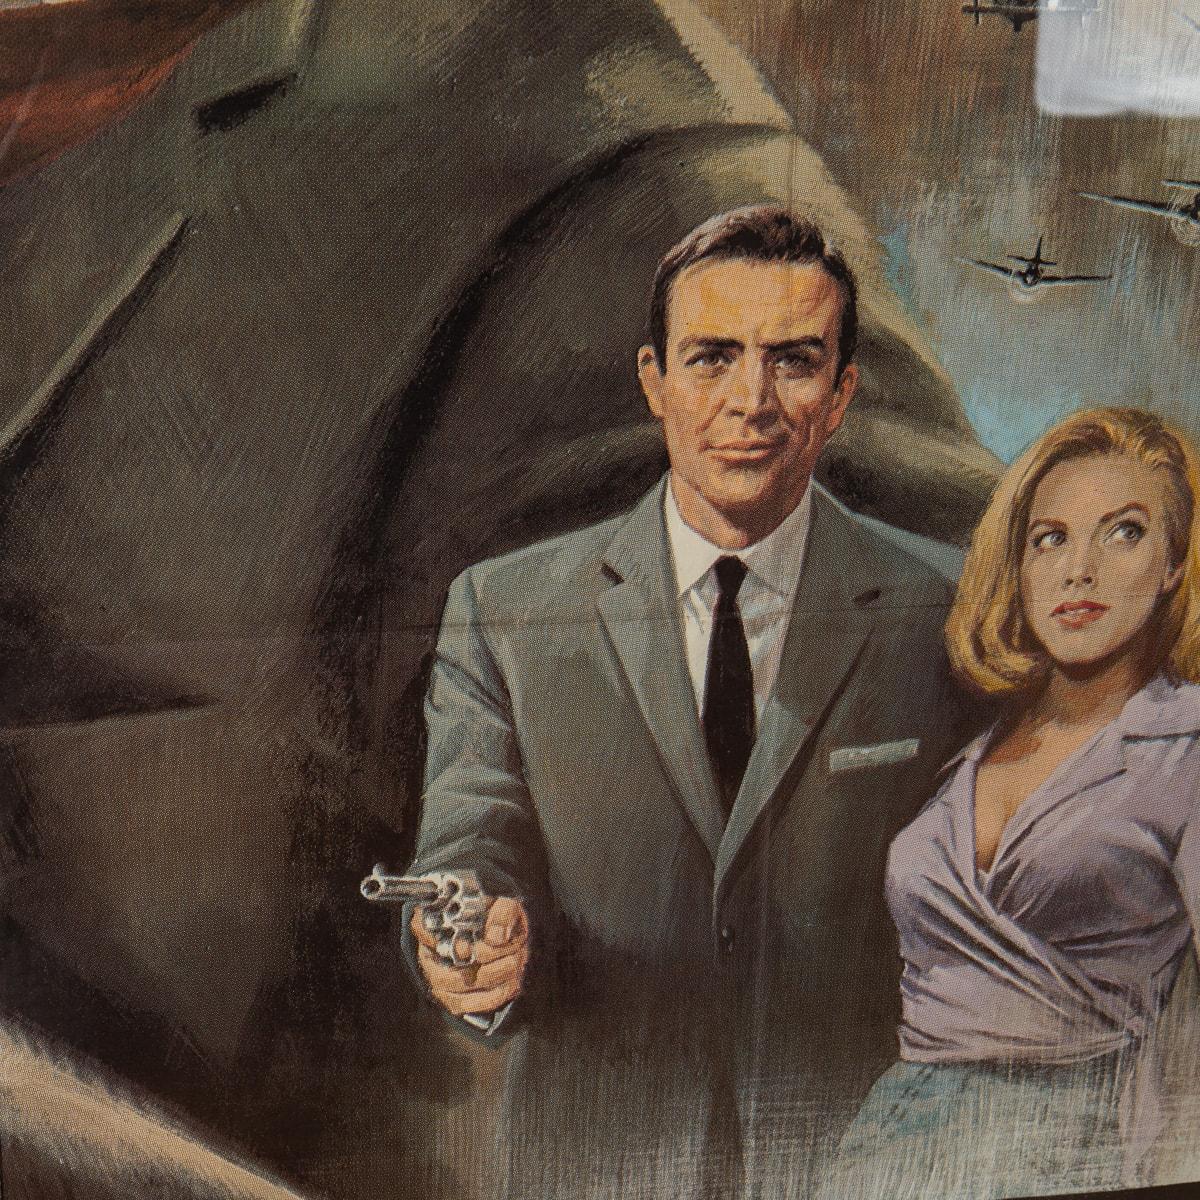 Original French Release James Bond Goldfinger Poster c.1964 For Sale 3